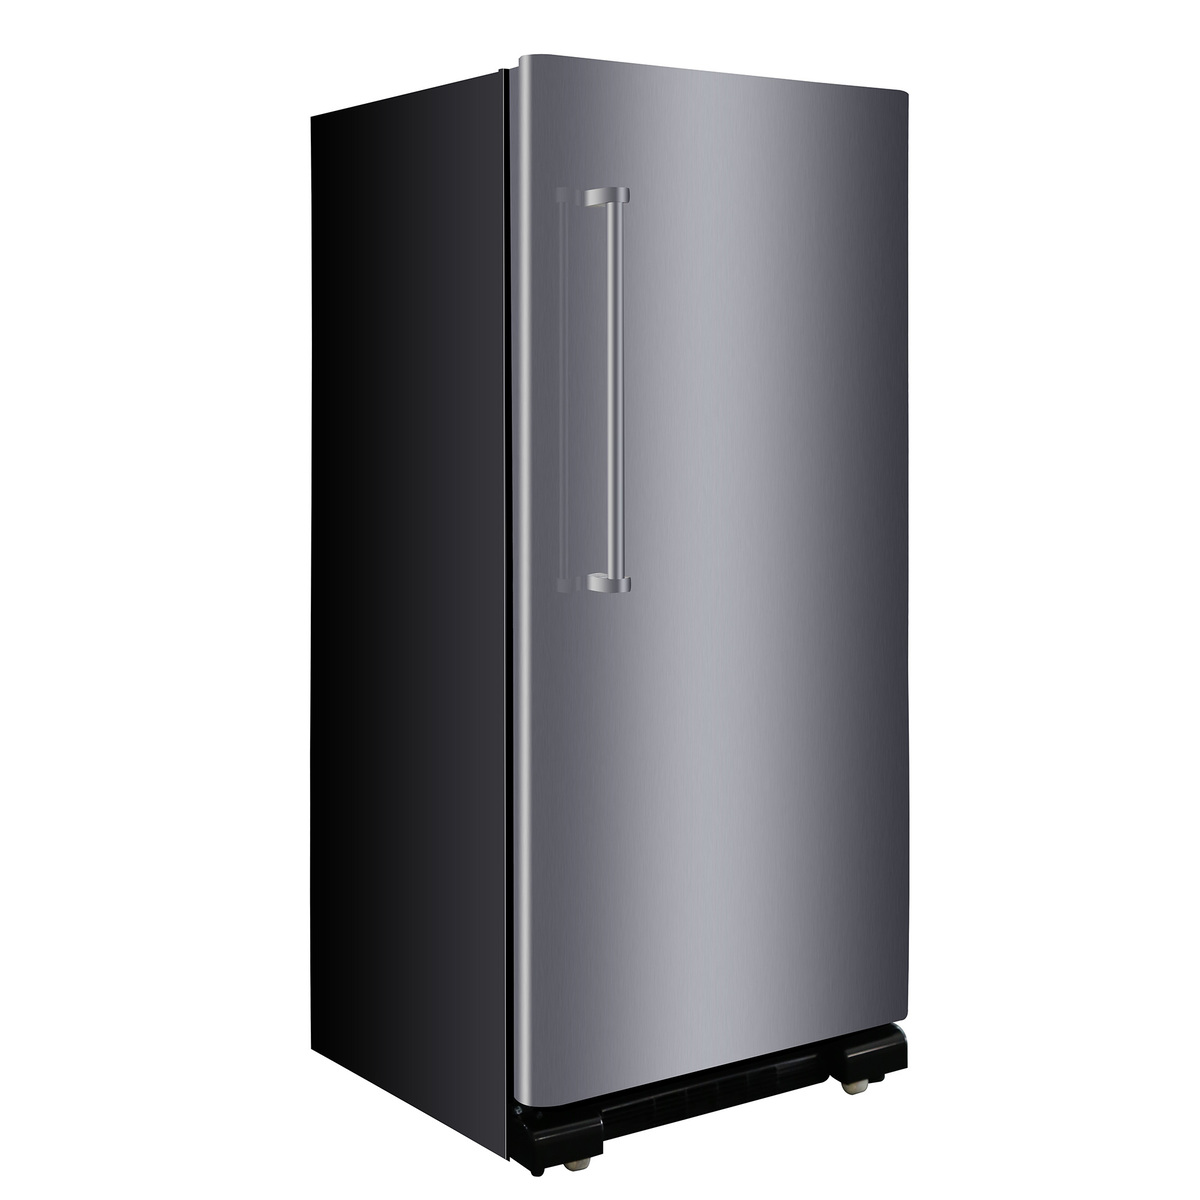 Ignis Upright Freezer FXV650NFX 565Ltr Online at Best Price | Upright ...